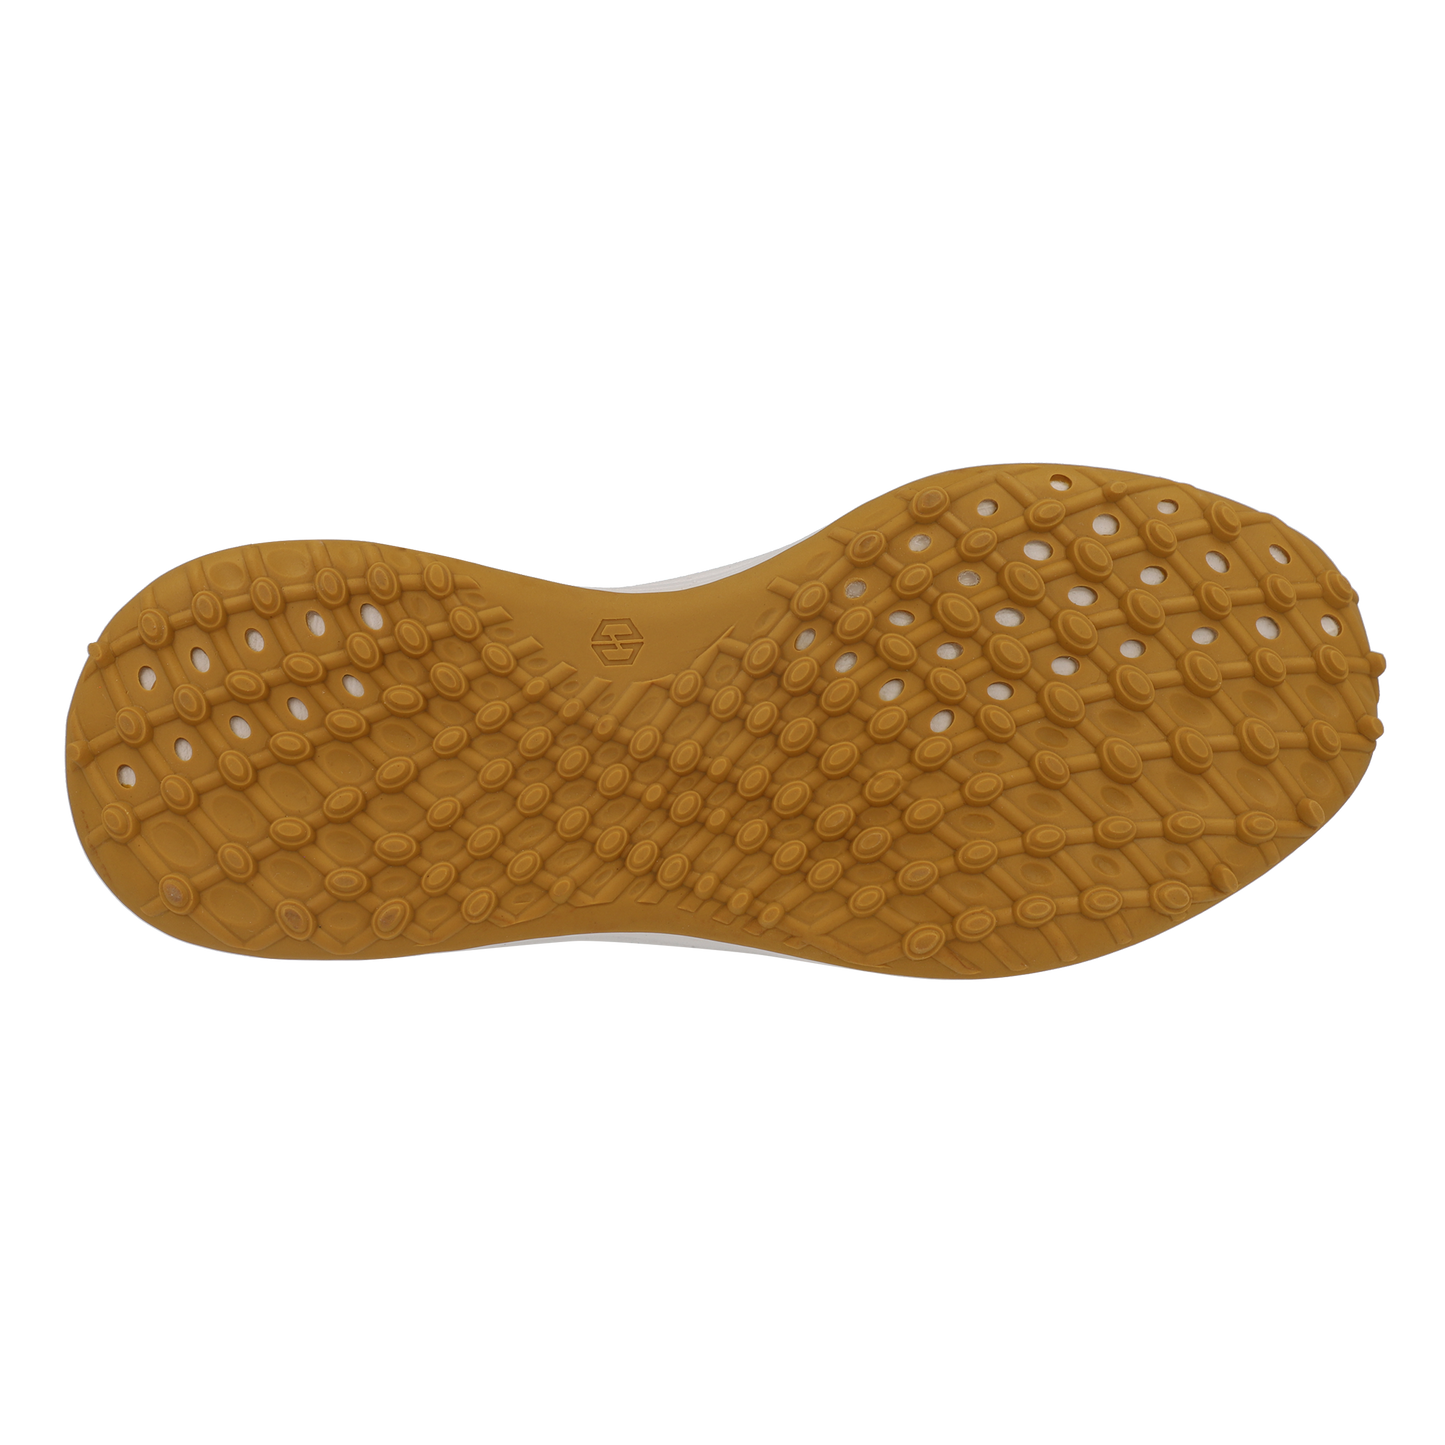 FITTEREST Spider Wave Golf Shoes for Men - FTR23 M SS WH102